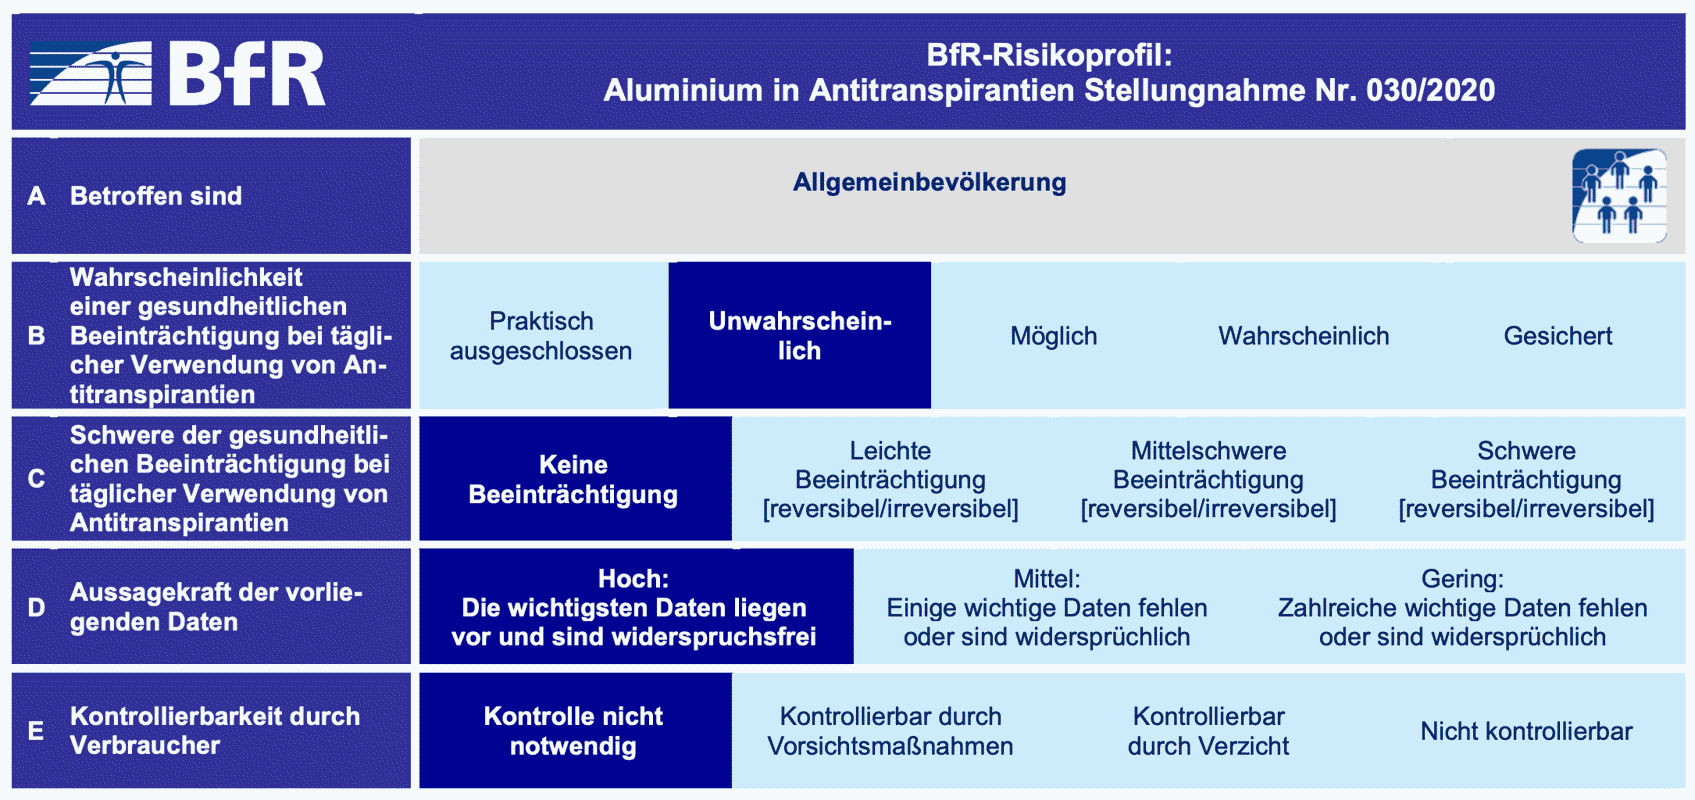 226304_2_2020-07-20 BfR - Gesamtbewertung - Aluminiumhaltige Antitranspirantien.png